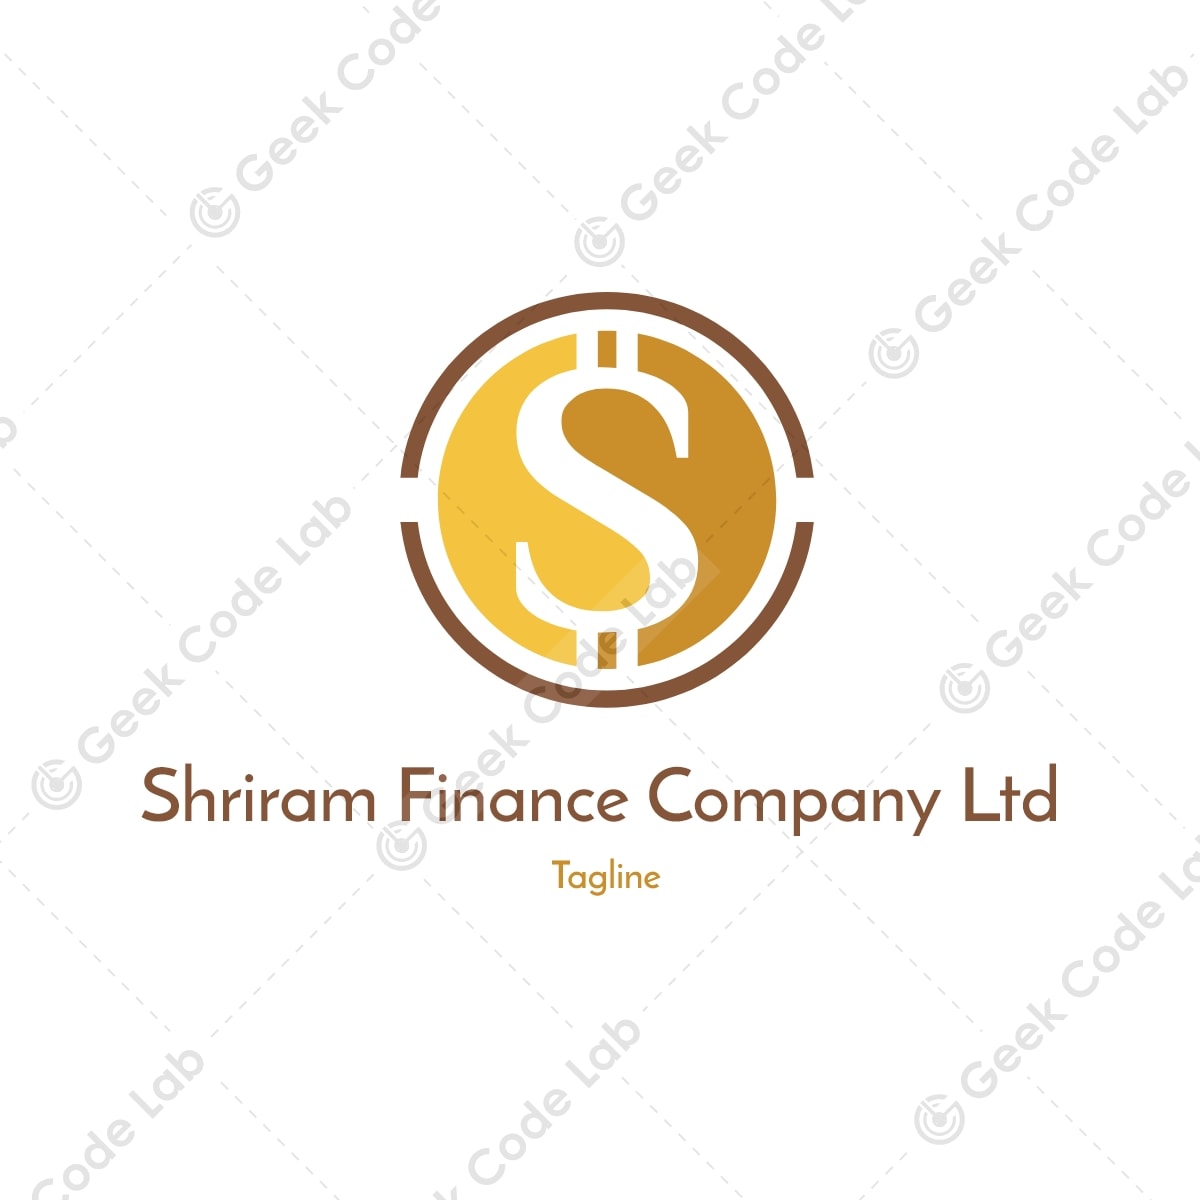 Shriram Finance Company Ltd